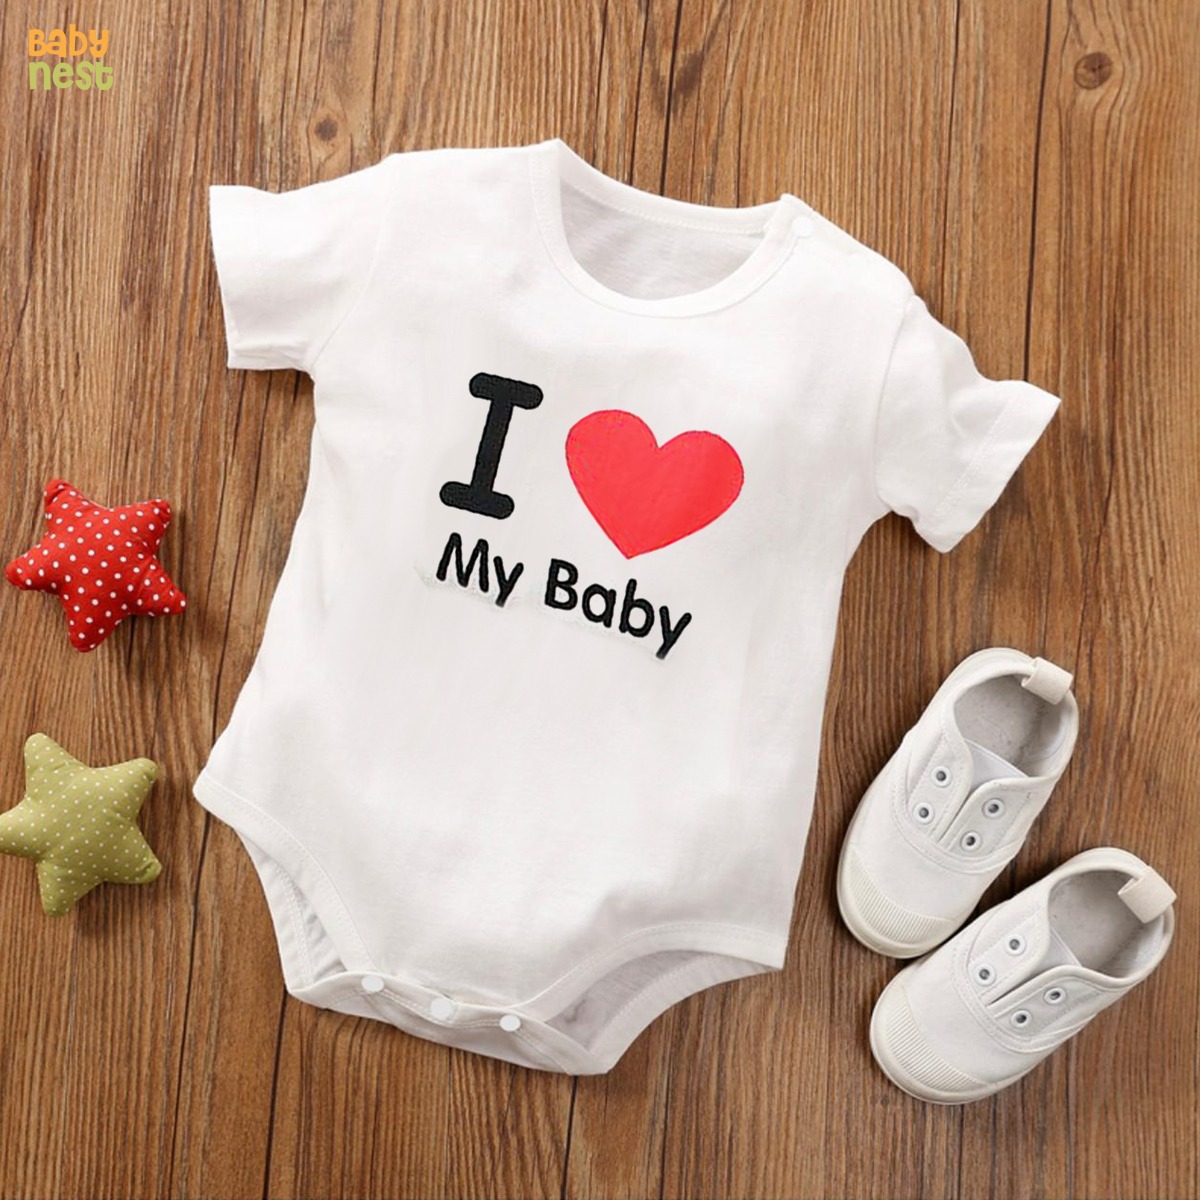 I Love my Baby – (White) RBT 140 Romper For Kids